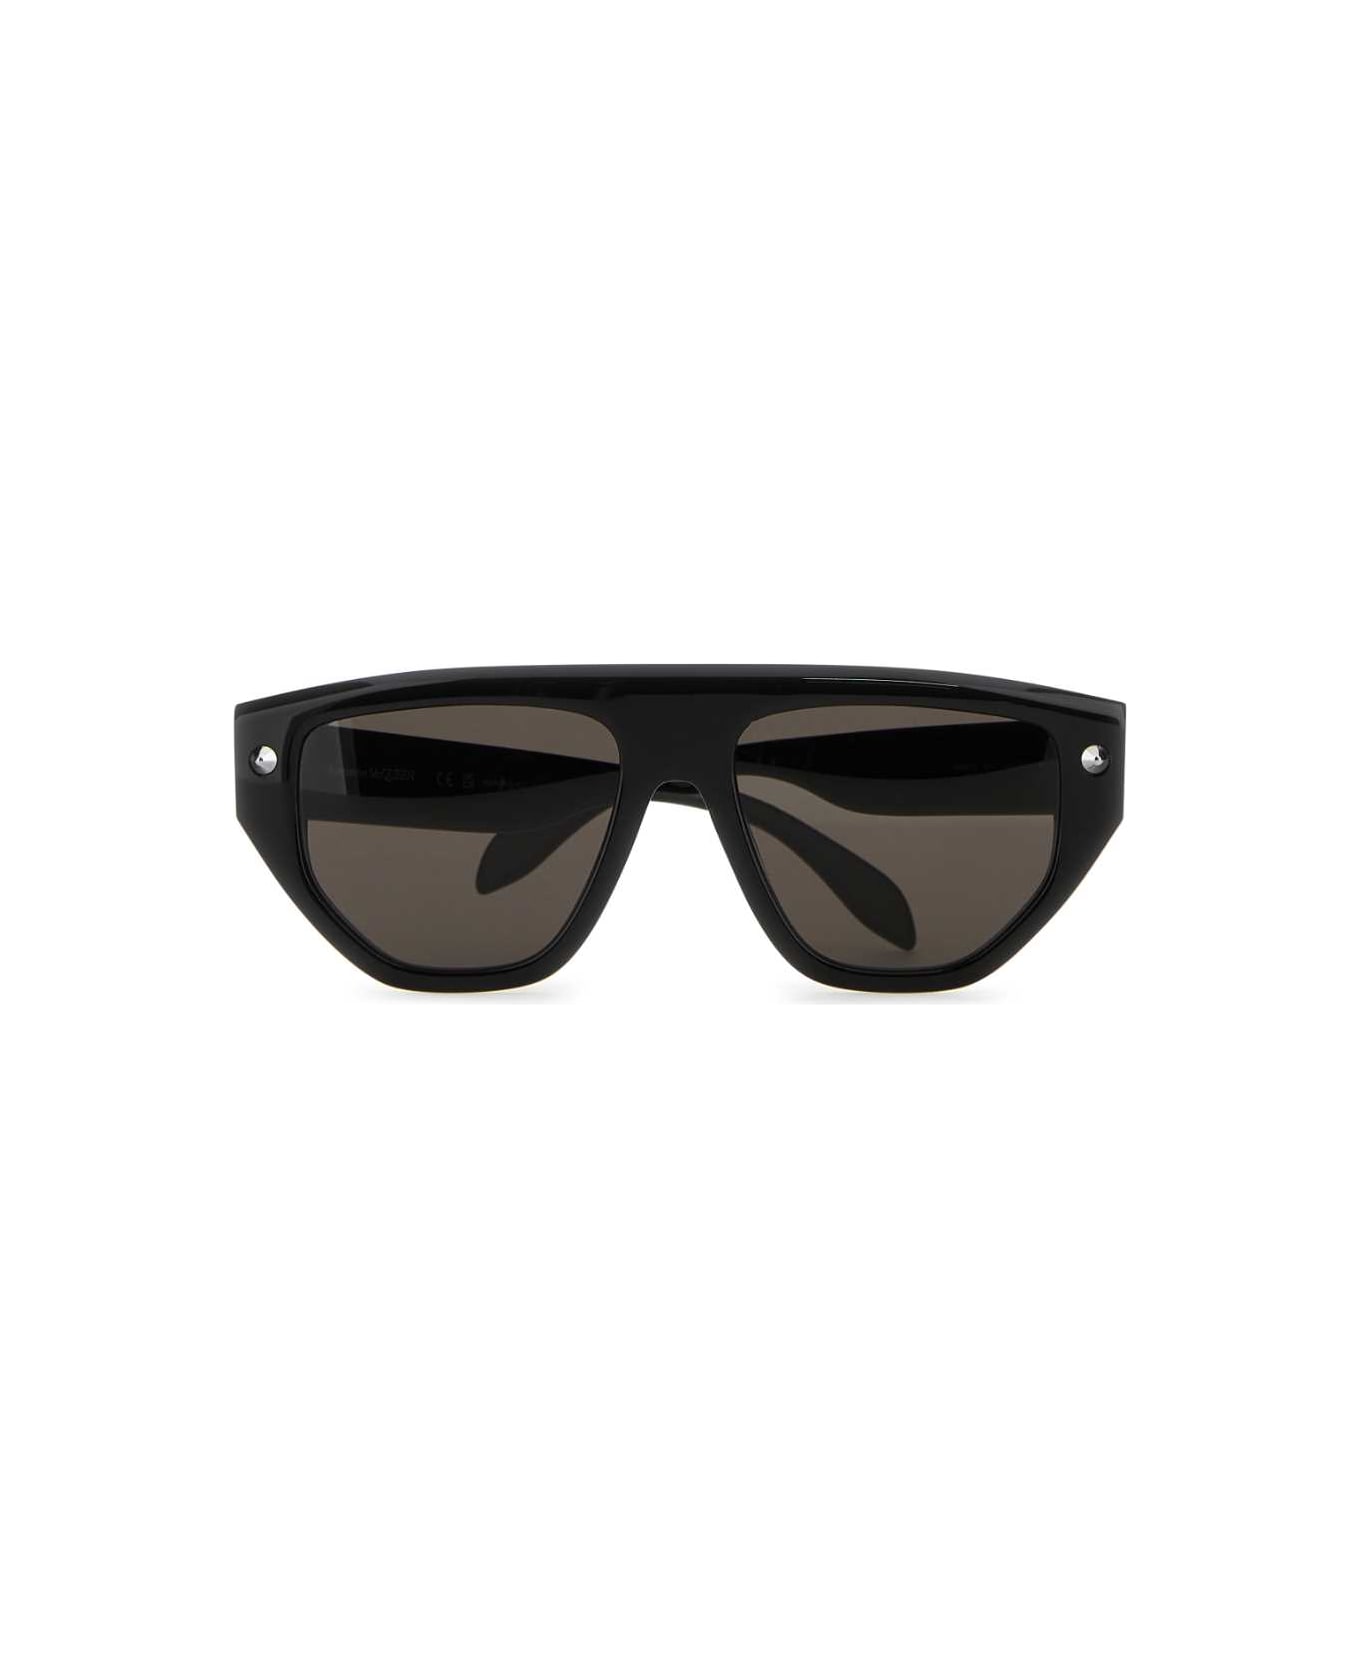 Alexander McQueen Black Acetate Sunglasses - BLACK-BLACK-SMOKE